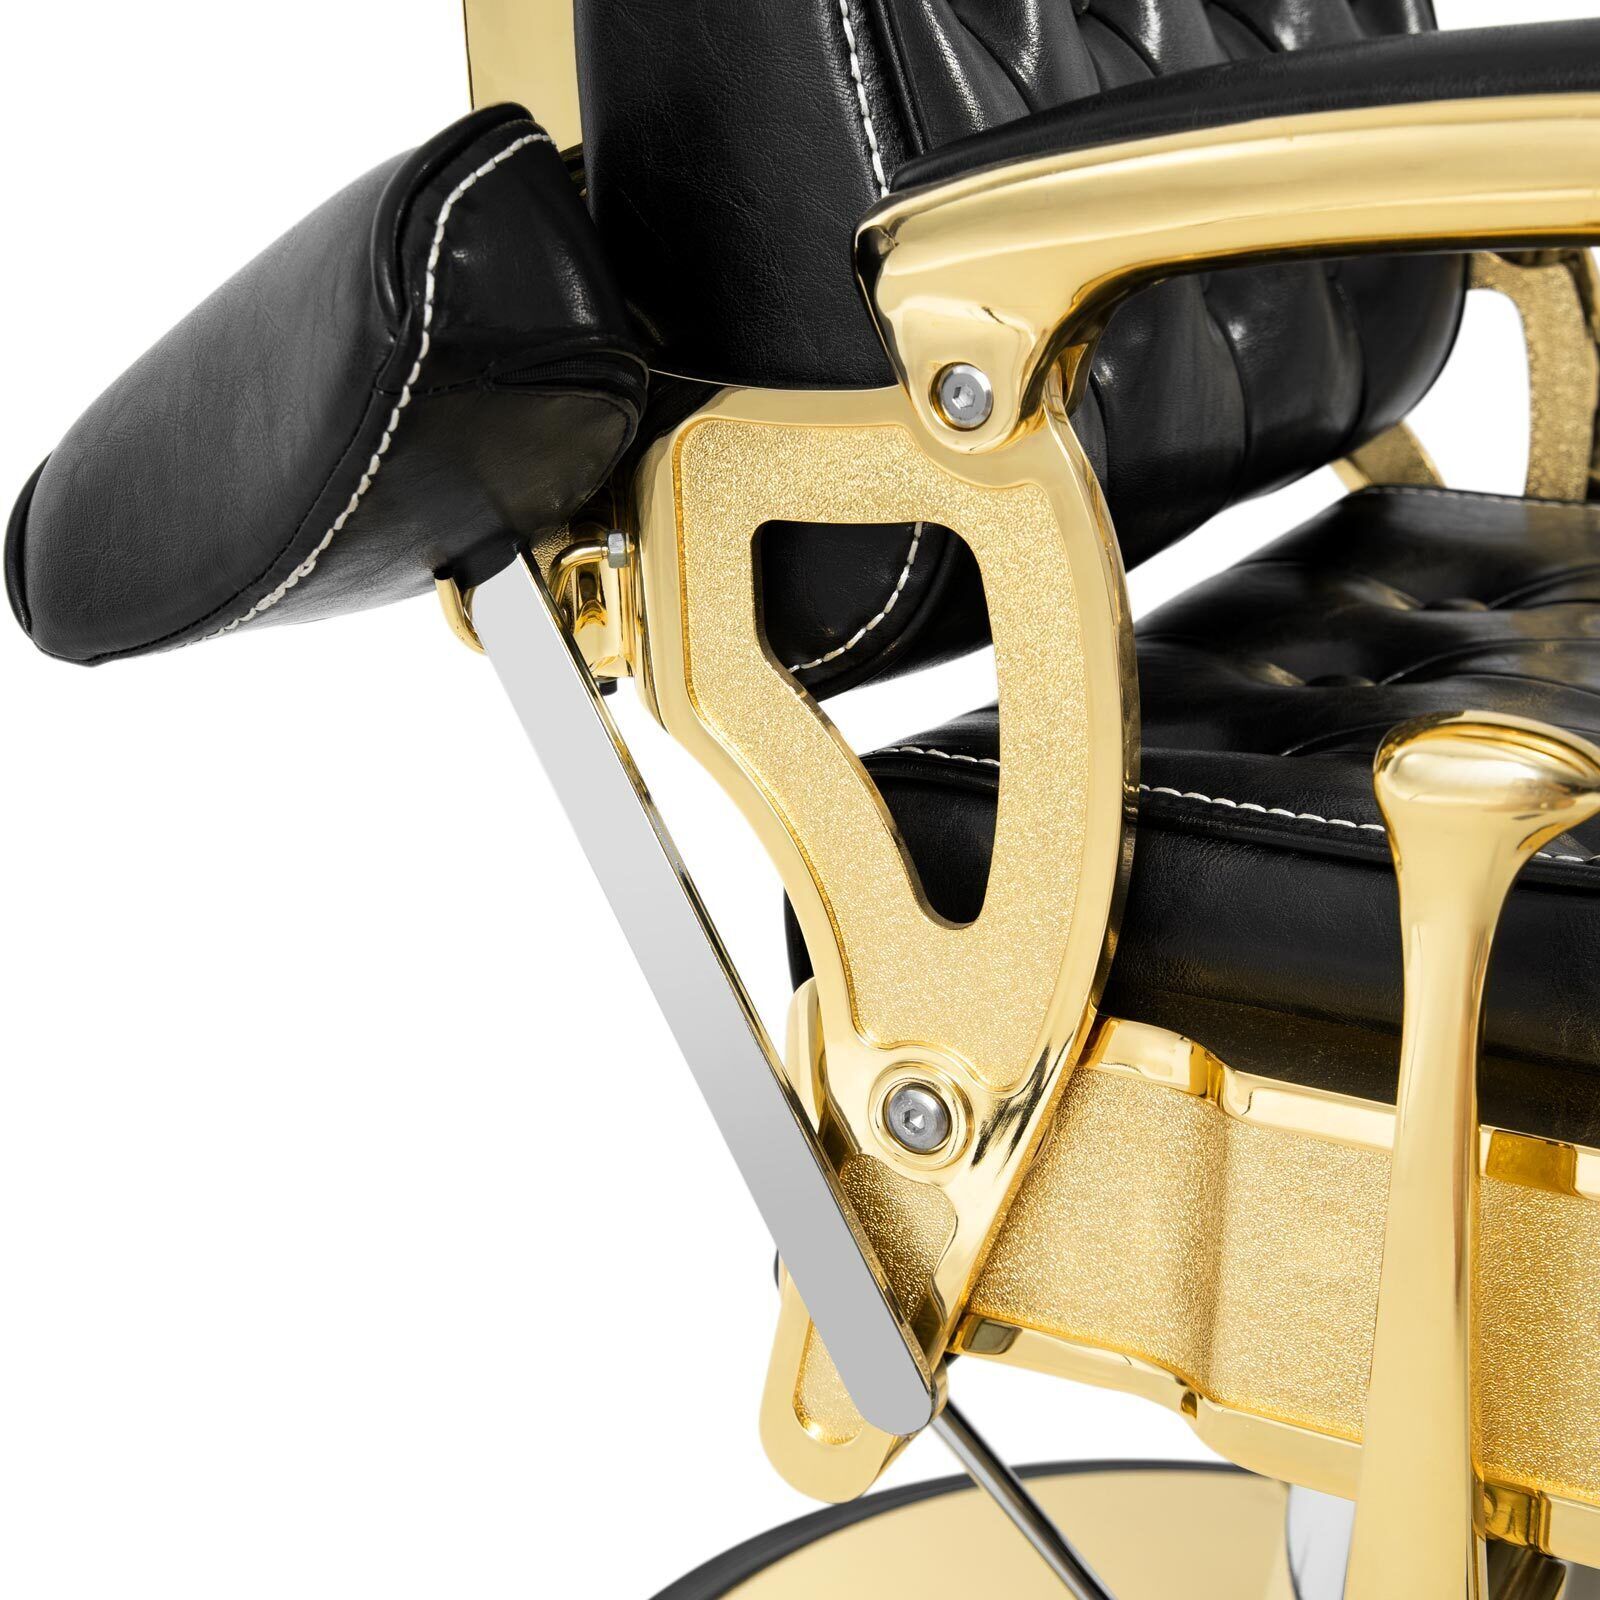 #5043 Heavy Duty Vintage Barber Chair (Gold/Black)